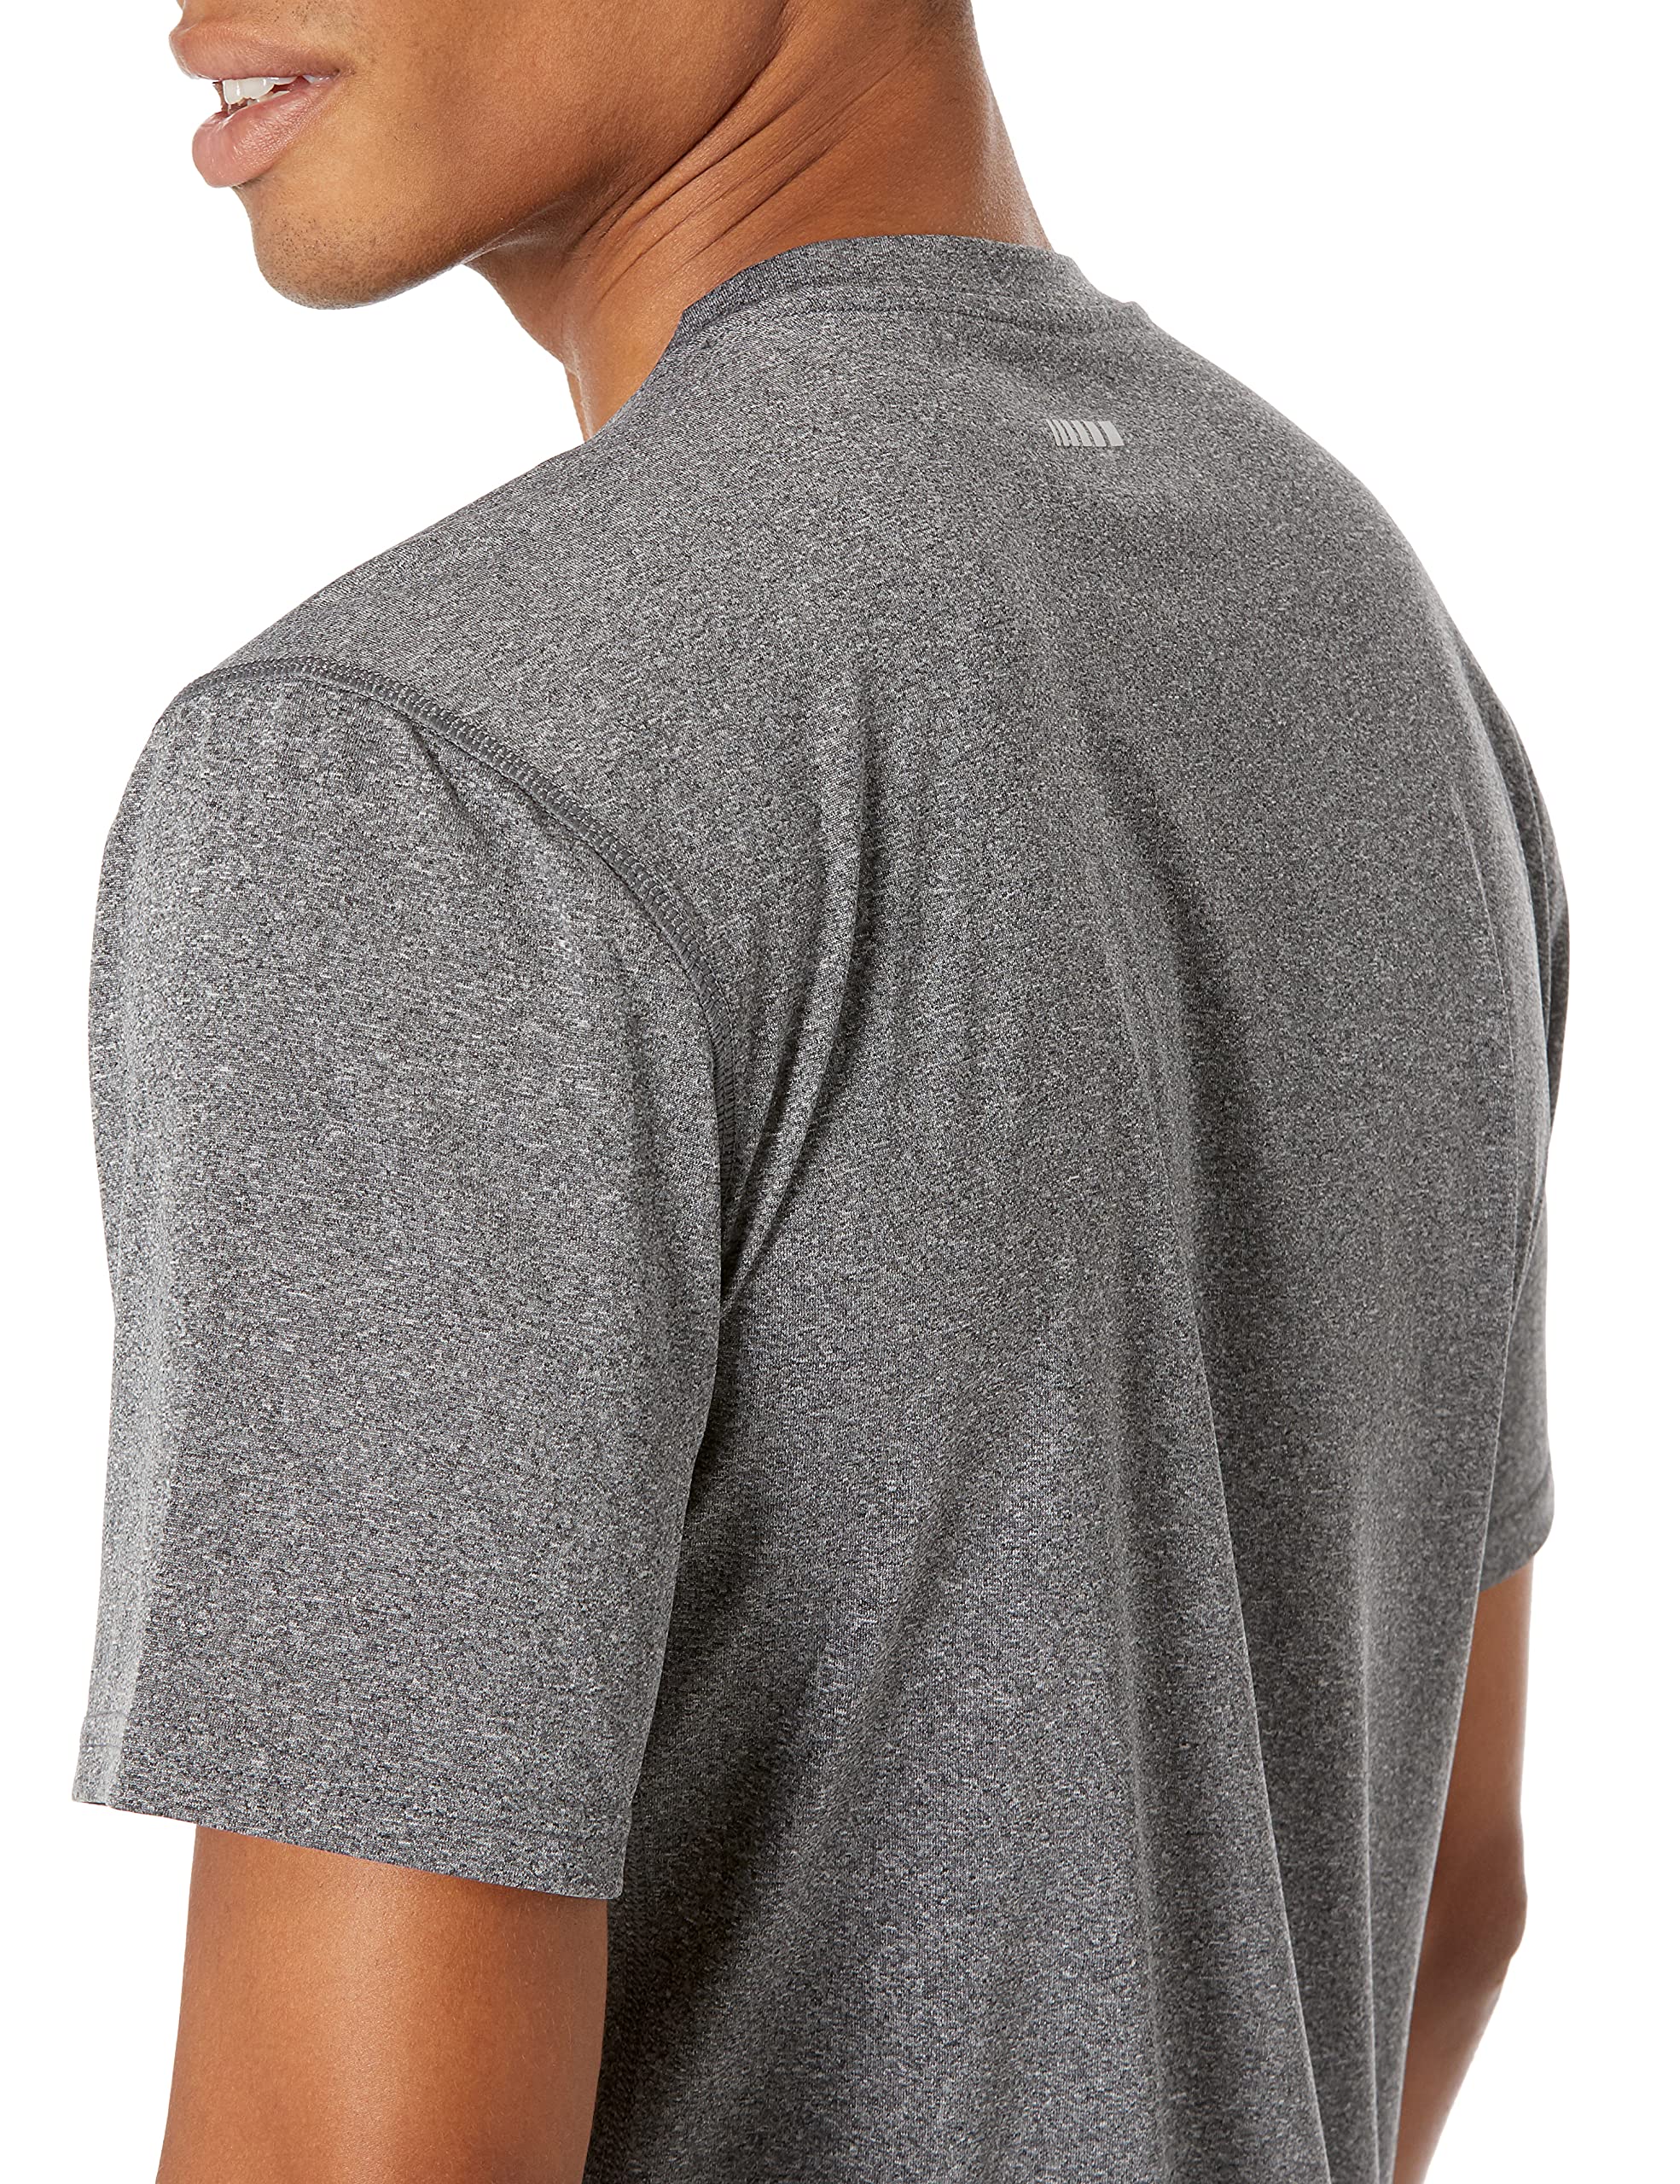 Amazon Essentials Men's Tech Stretch Short-Sleeve T-Shirt